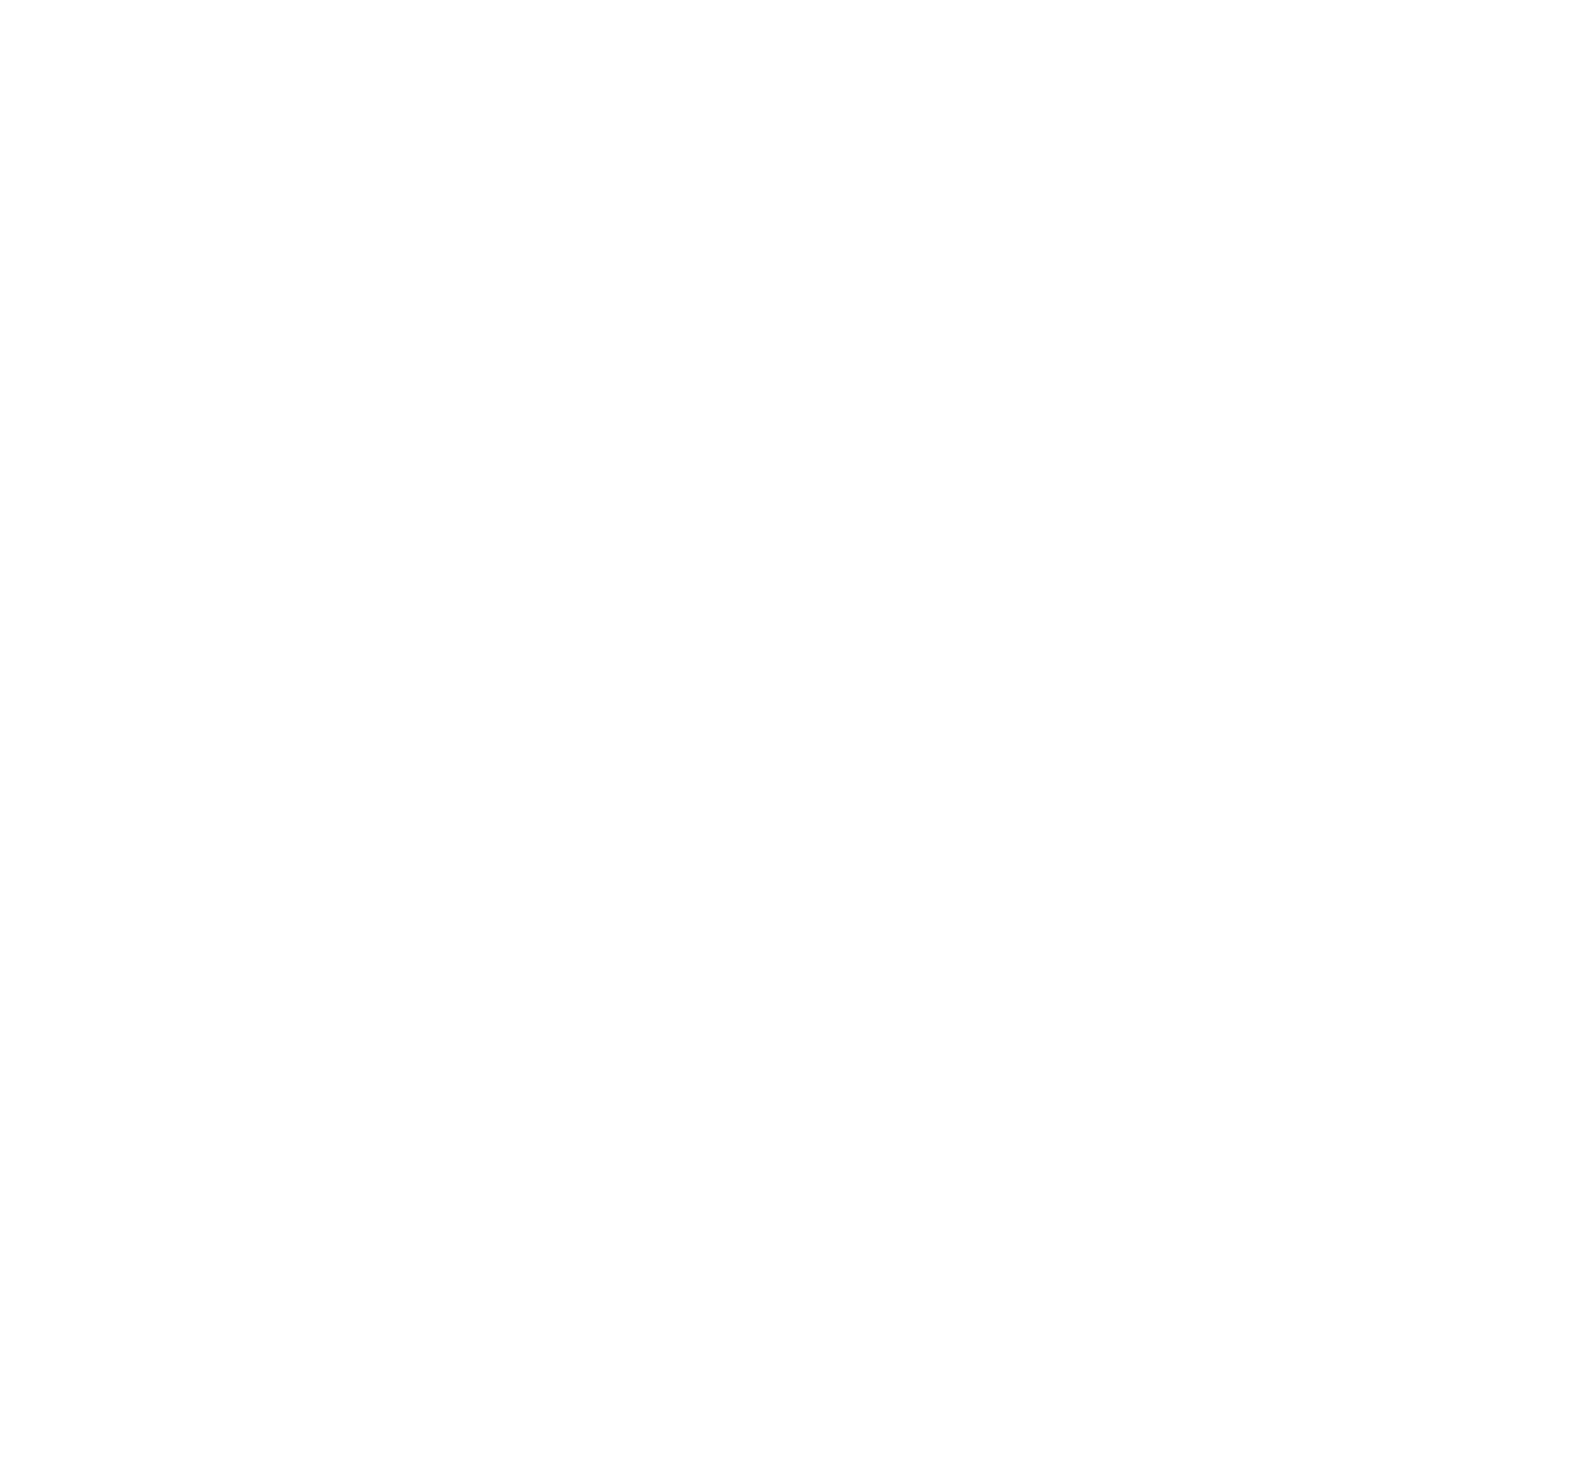 Qatar Aluminium Manufacturing Company logo large for dark backgrounds (transparent PNG)